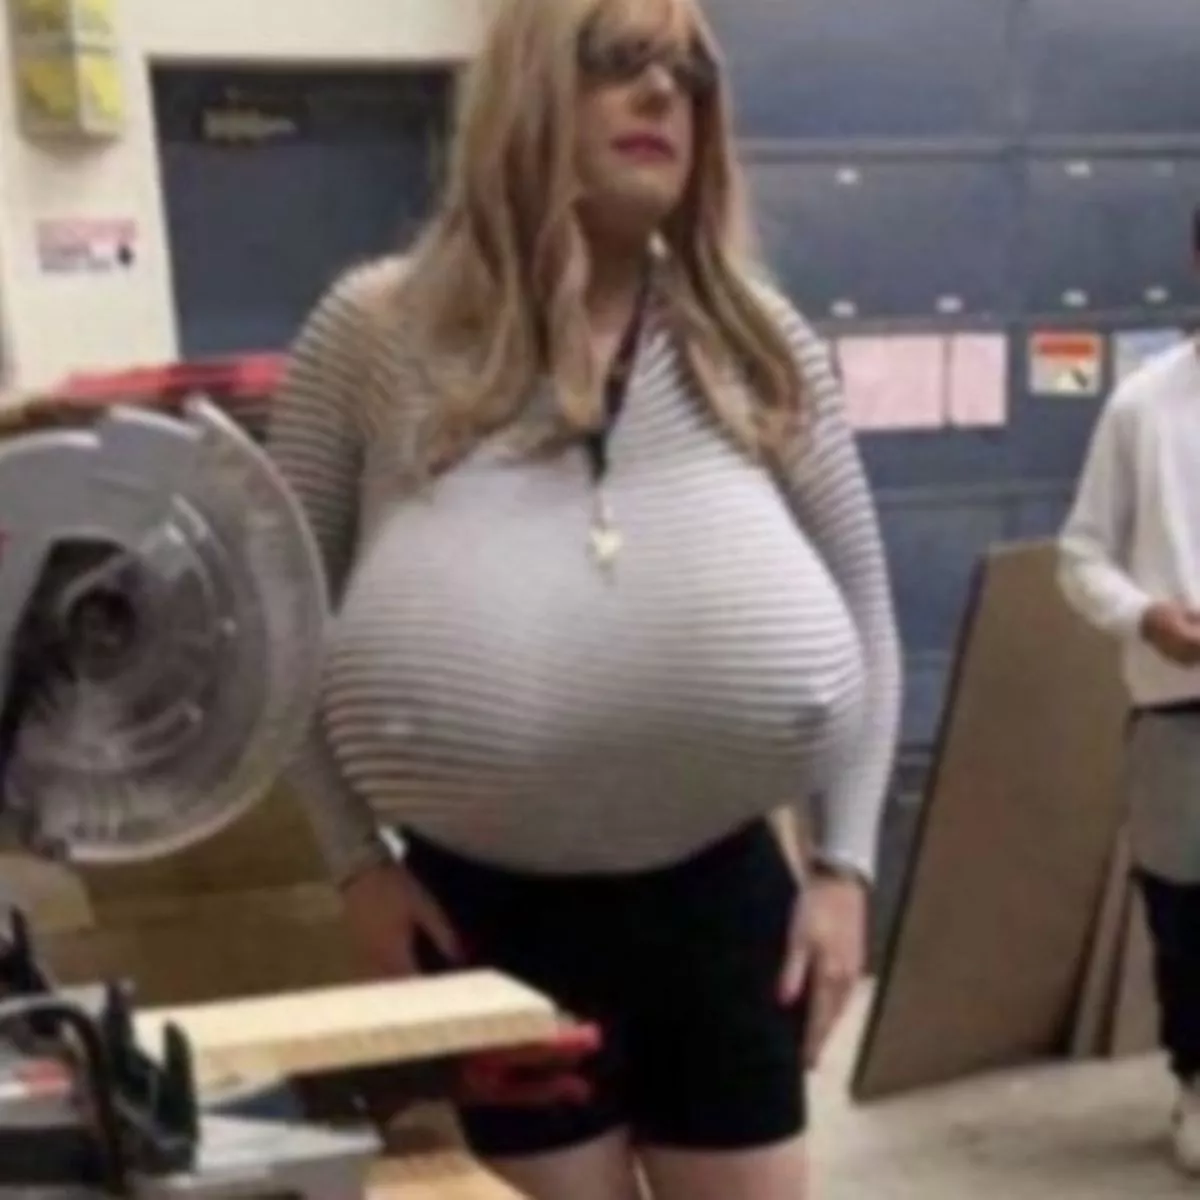 bob souliere add teacher with massive tits photo